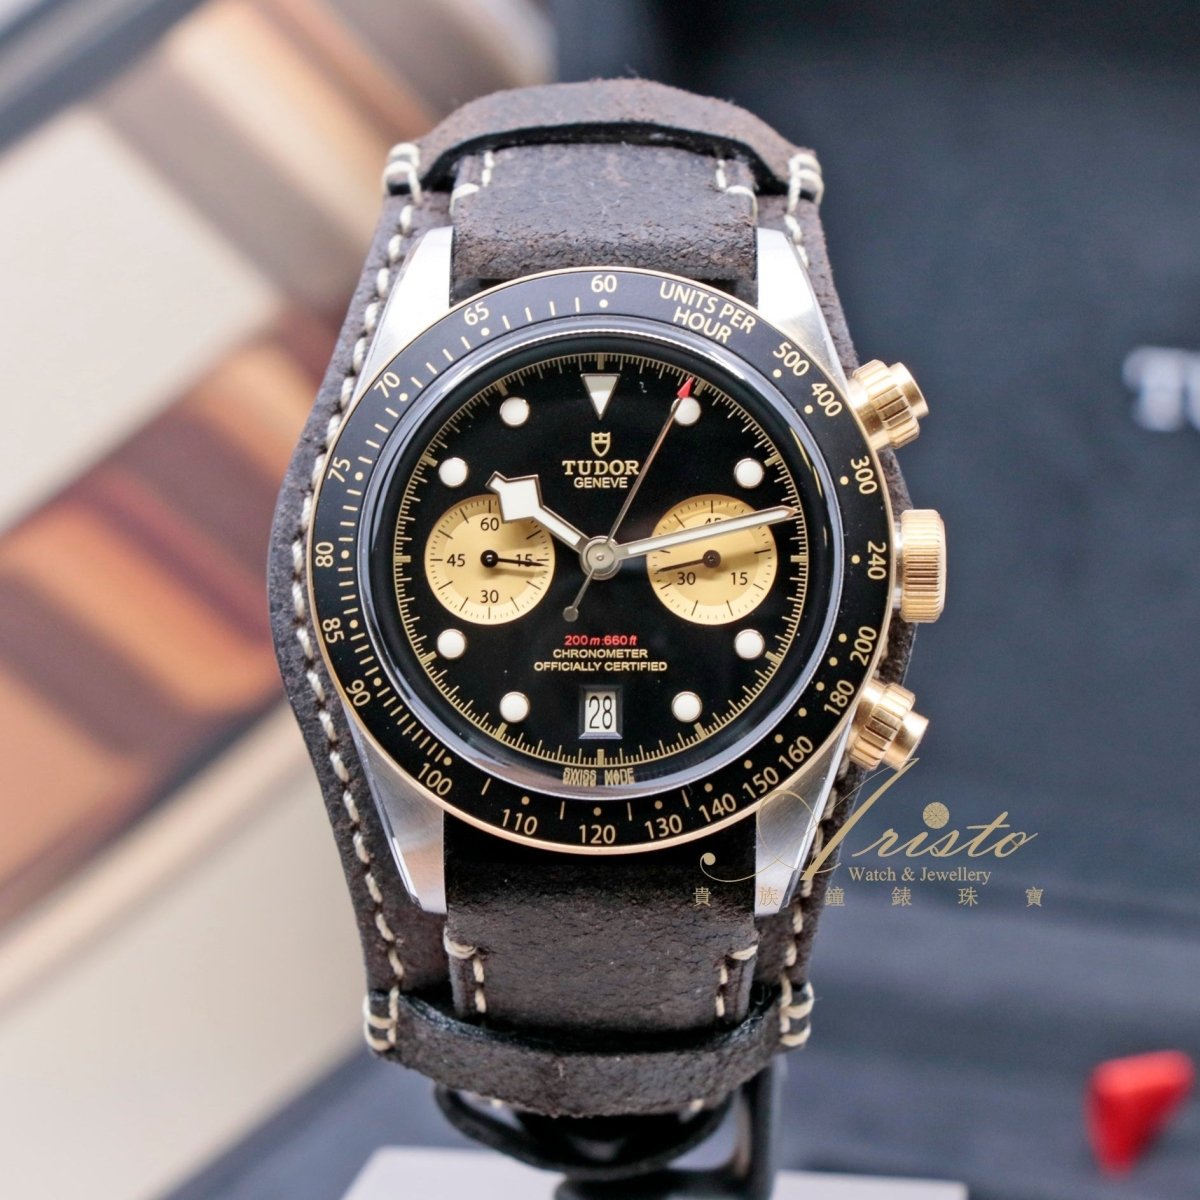 Tudor 79363N Watches- Aristo Watch & Jewellery